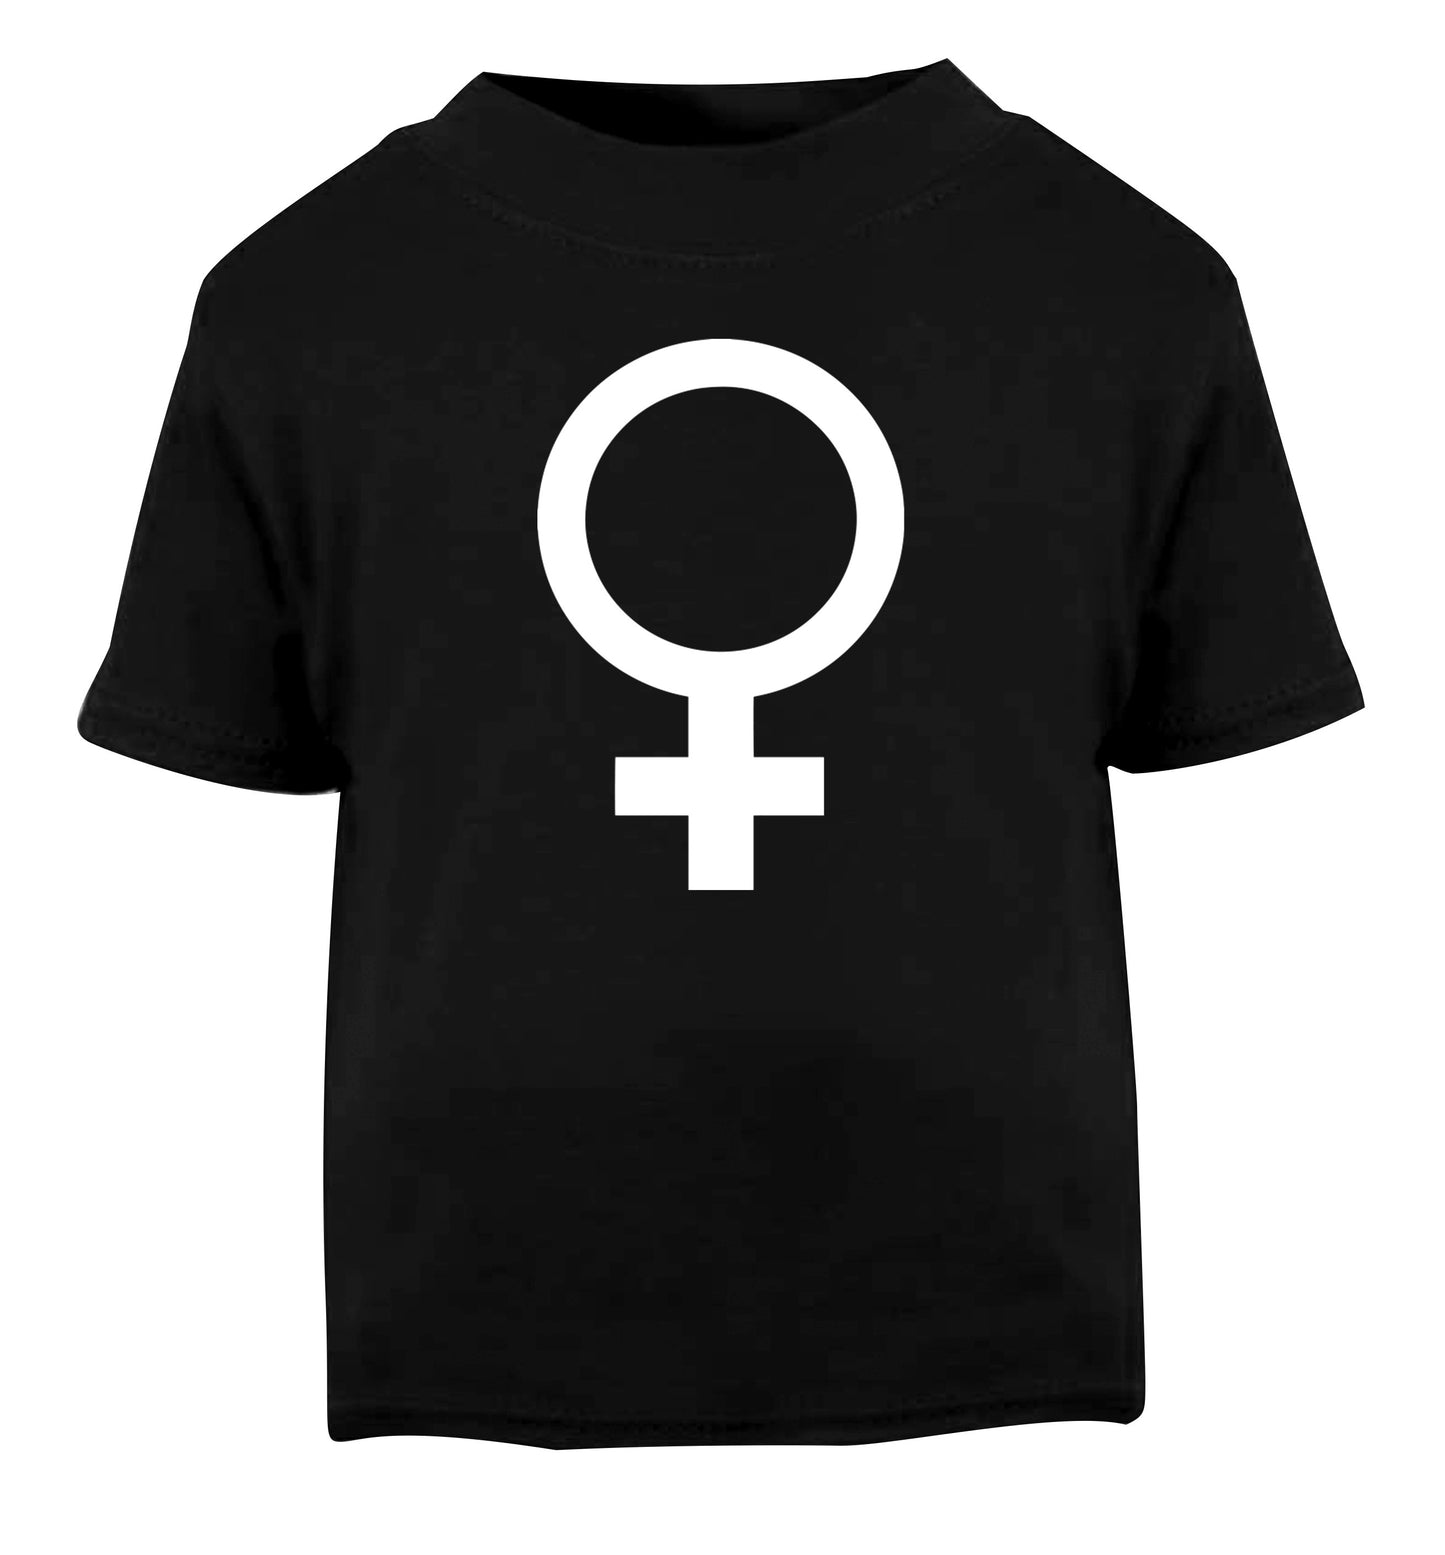 Female symbol large Black Baby Toddler Tshirt 2 years